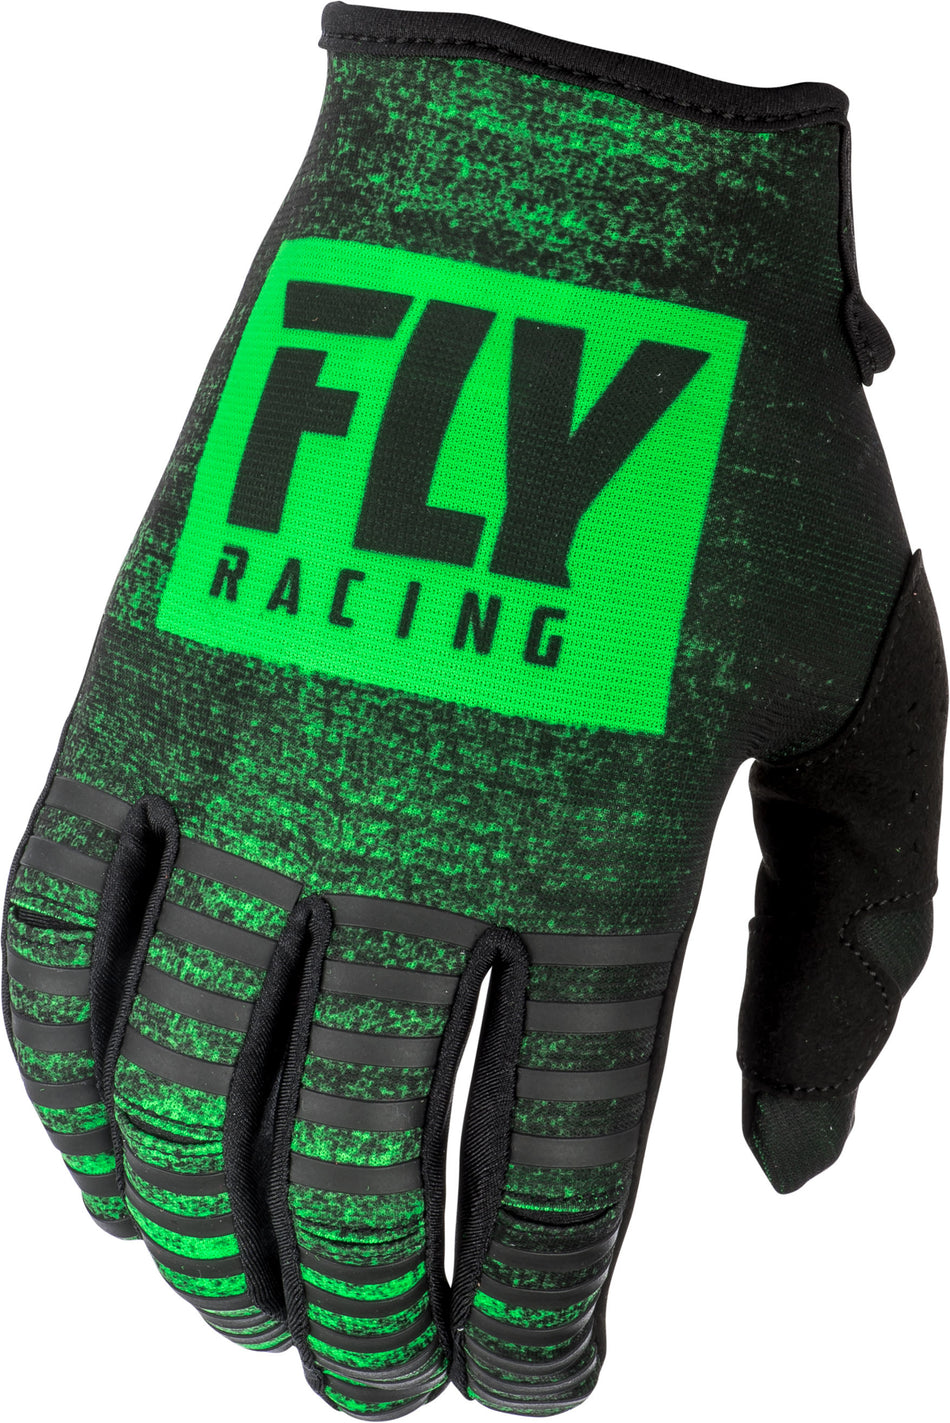 FLY RACING Kinetic Noiz Gloves Neon Green/Black Sz 13 372-51513